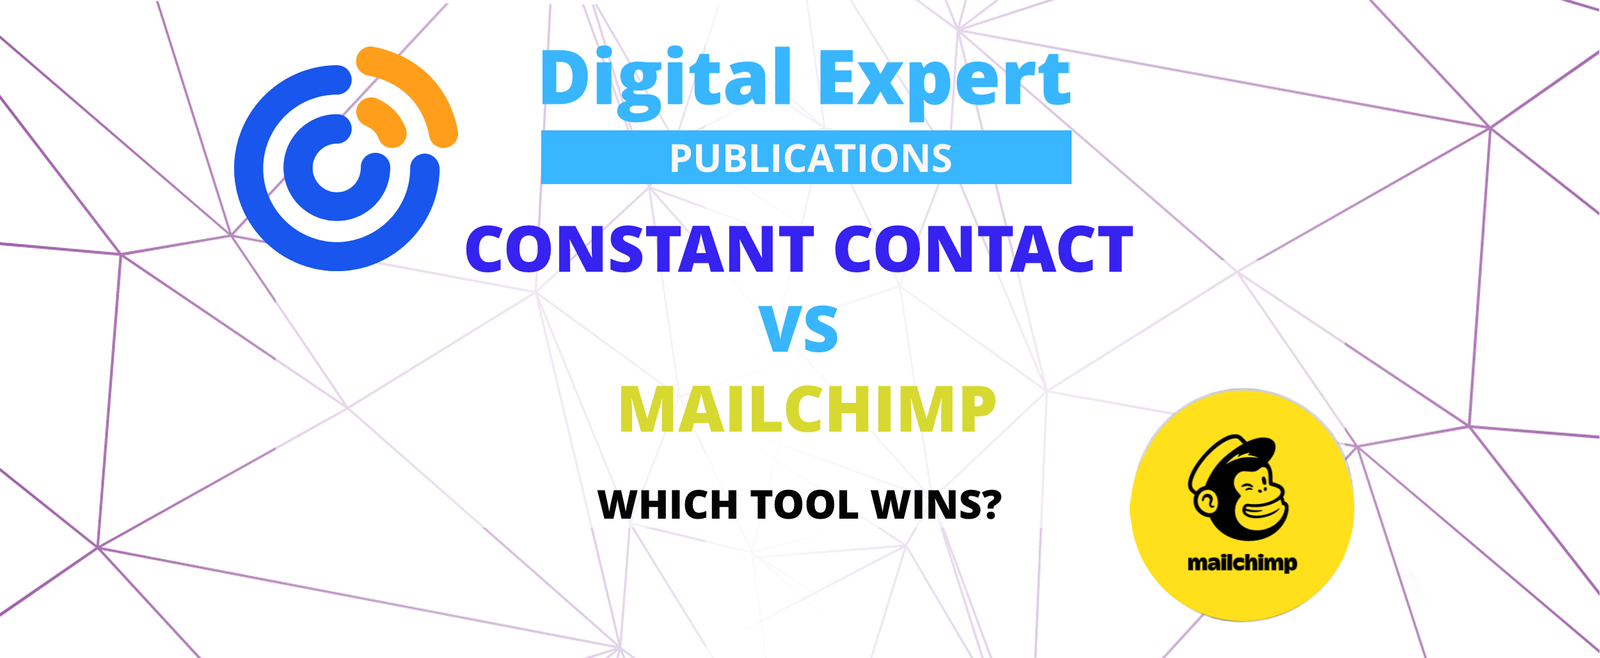 Constant Contact vs Mailchimp. Which tool wins? Service comparison - Digital Expert